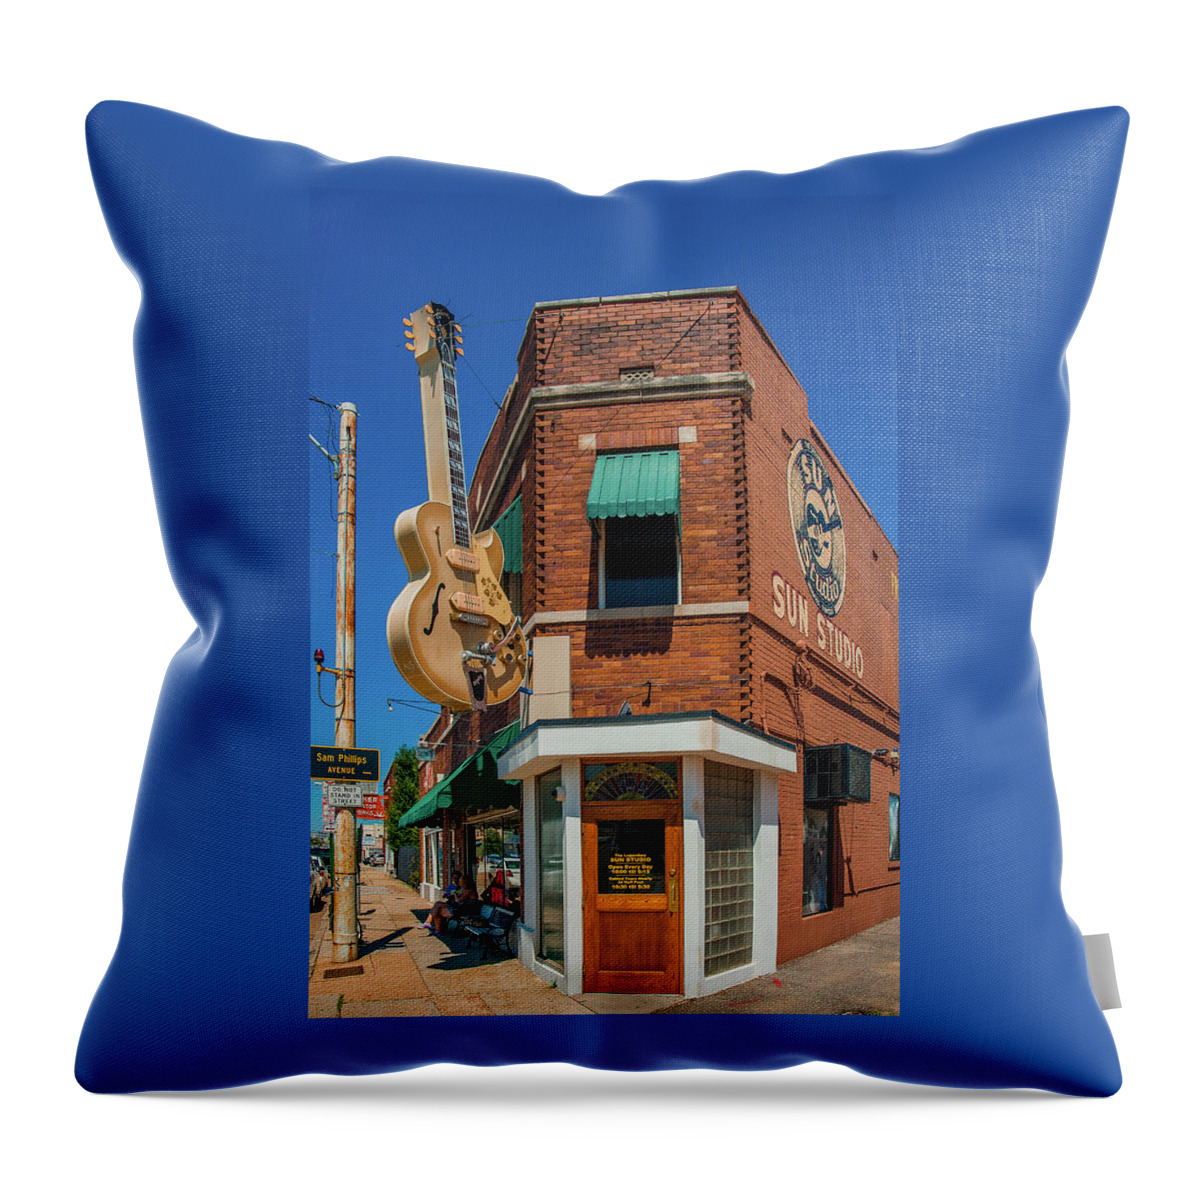 Memphis Throw Pillow featuring the photograph Sun Studio _23 by James C Richardson